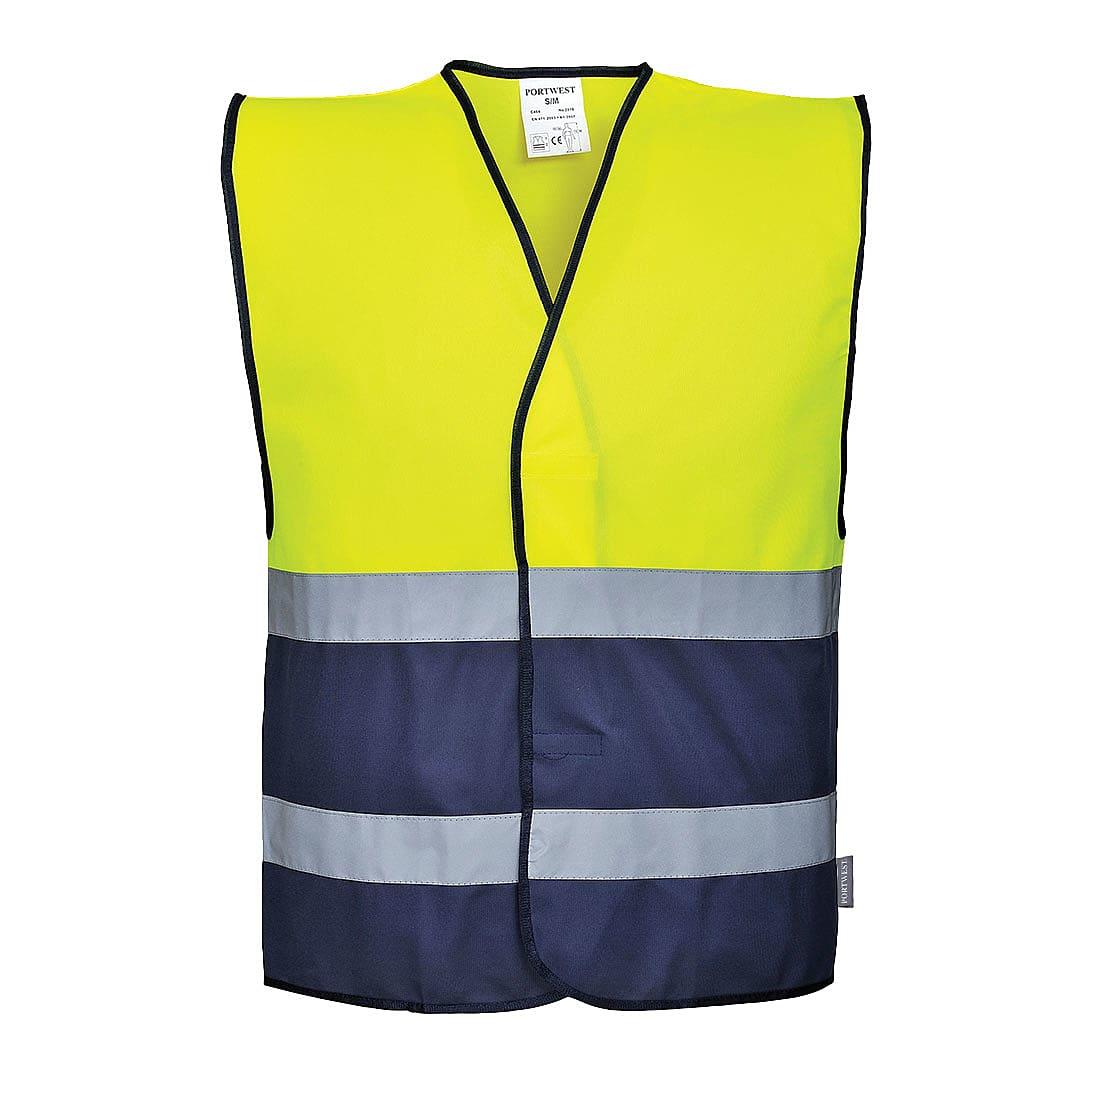 Portwest Hi-Viz Two Tone Vest in Yellow / Navy (Product Code: C484)